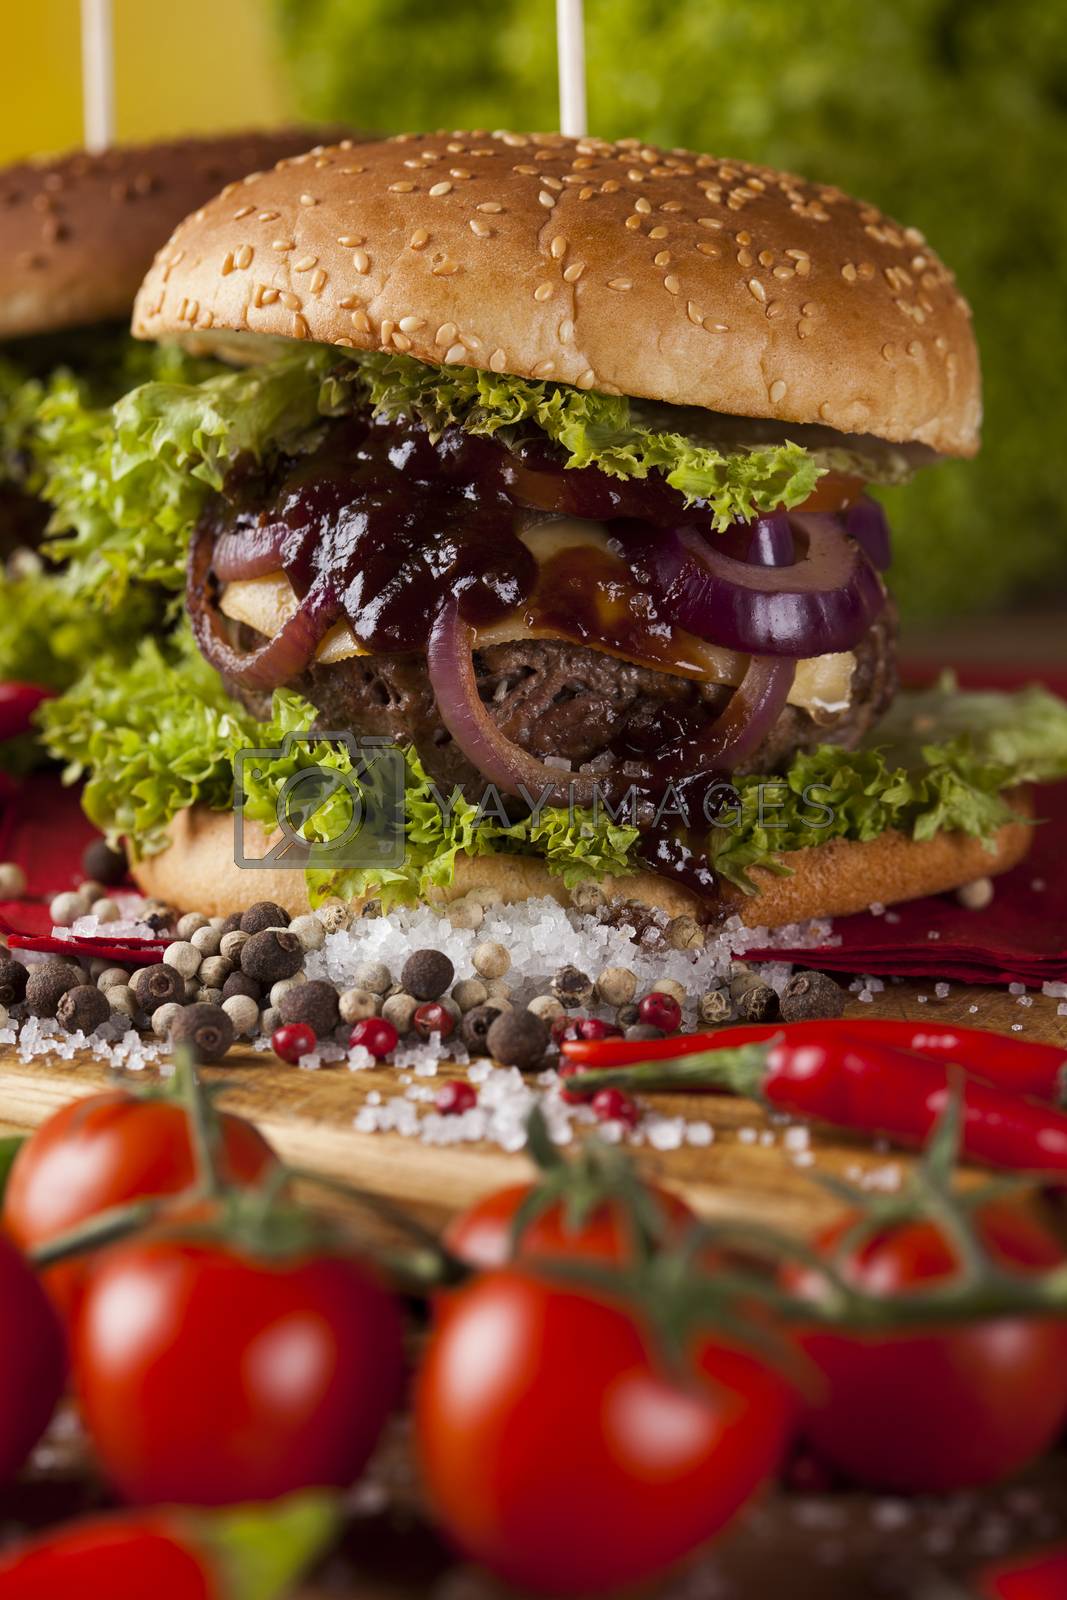 Royalty free image of Fresh burger closeup on wooden desk background by JanPietruszka